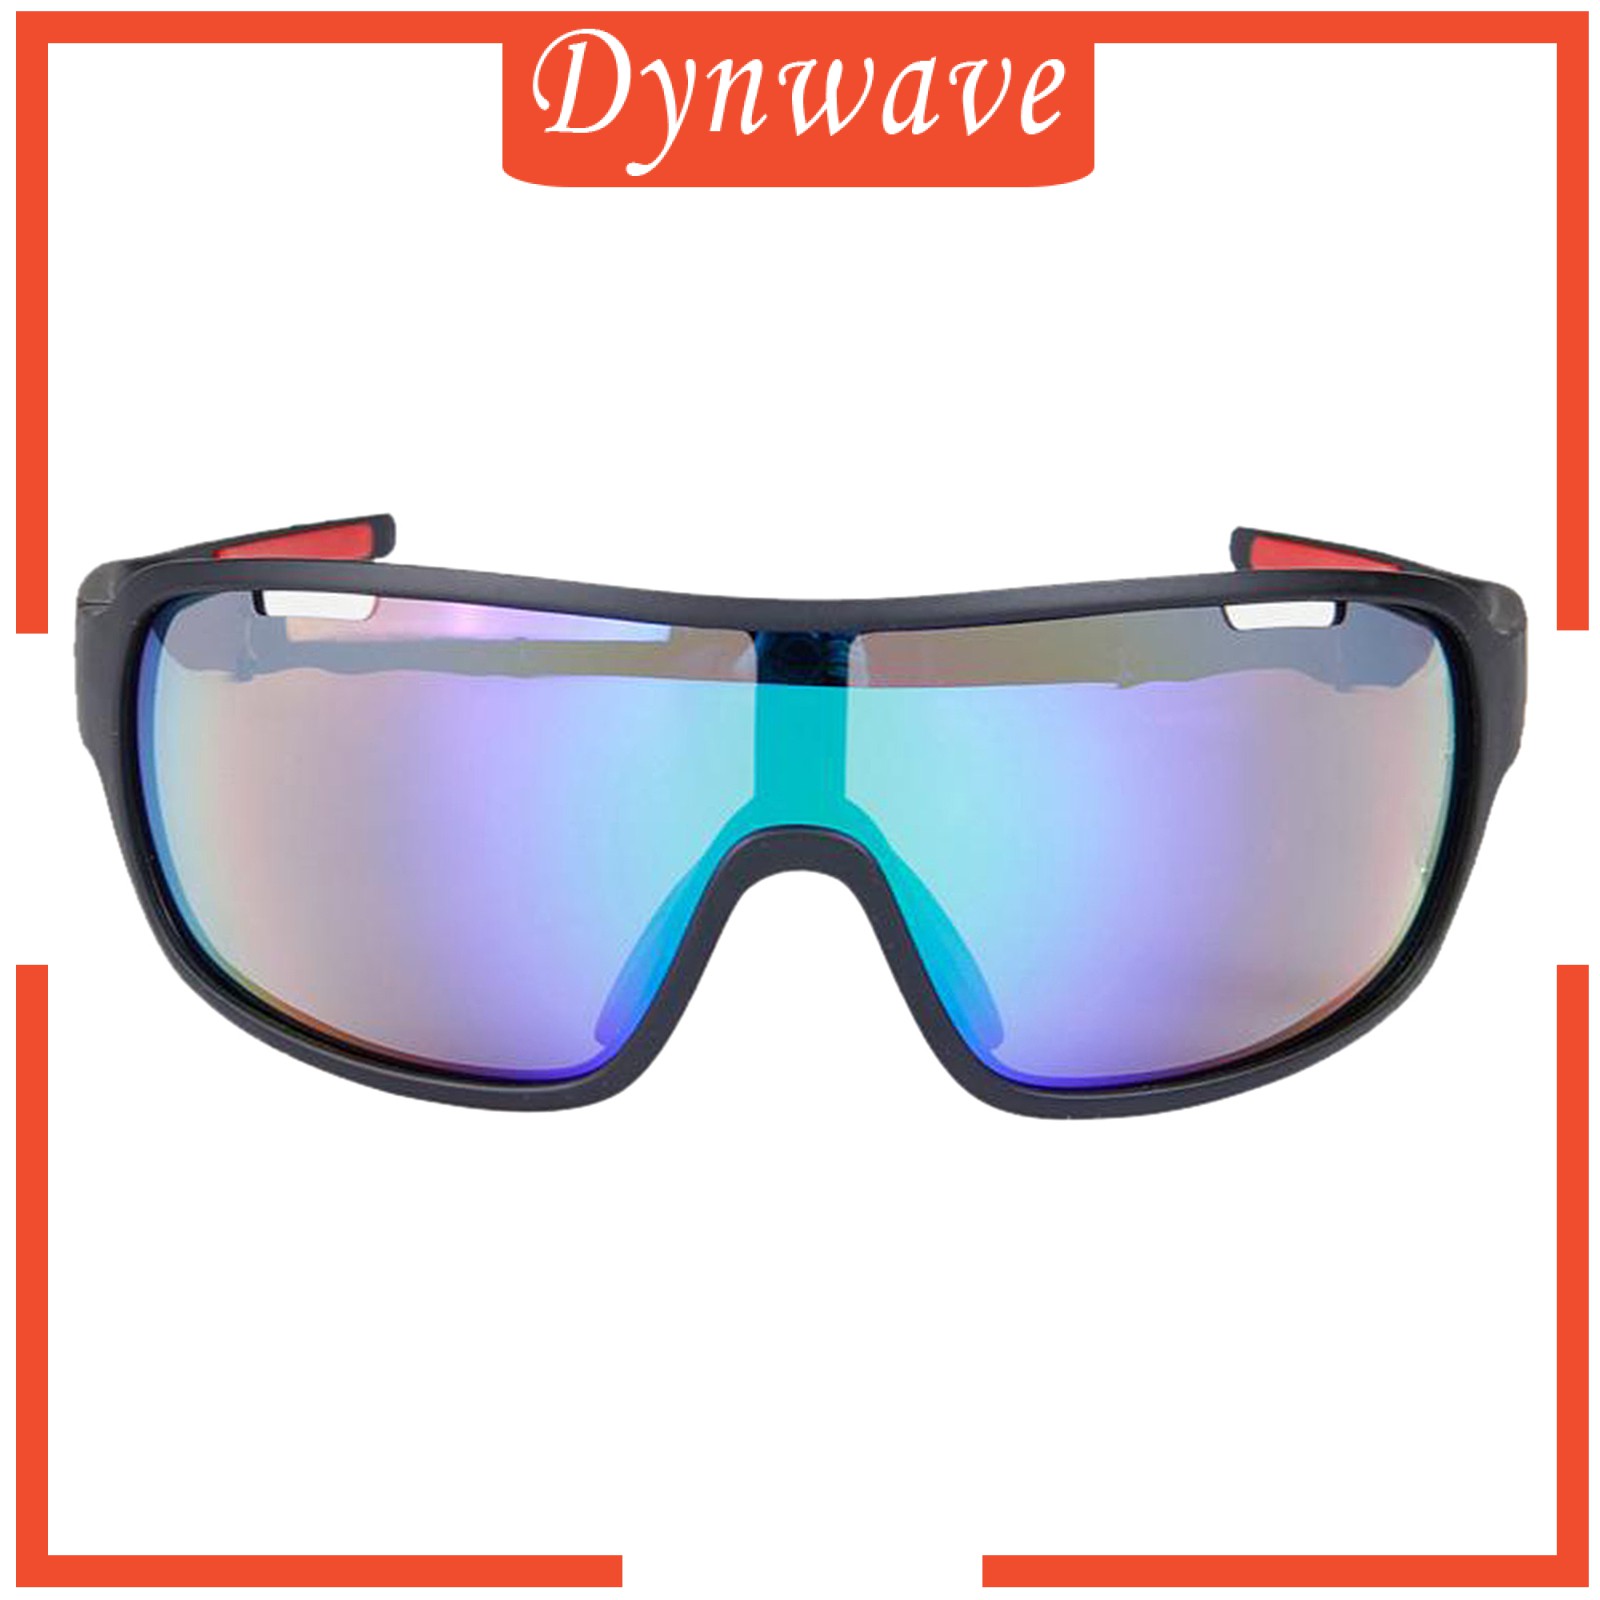 [DYNWAVE] Outdoor Sport Sunglasses Bike Cycling Glasses MTB Goggles Bicycle UV400 Eyewear